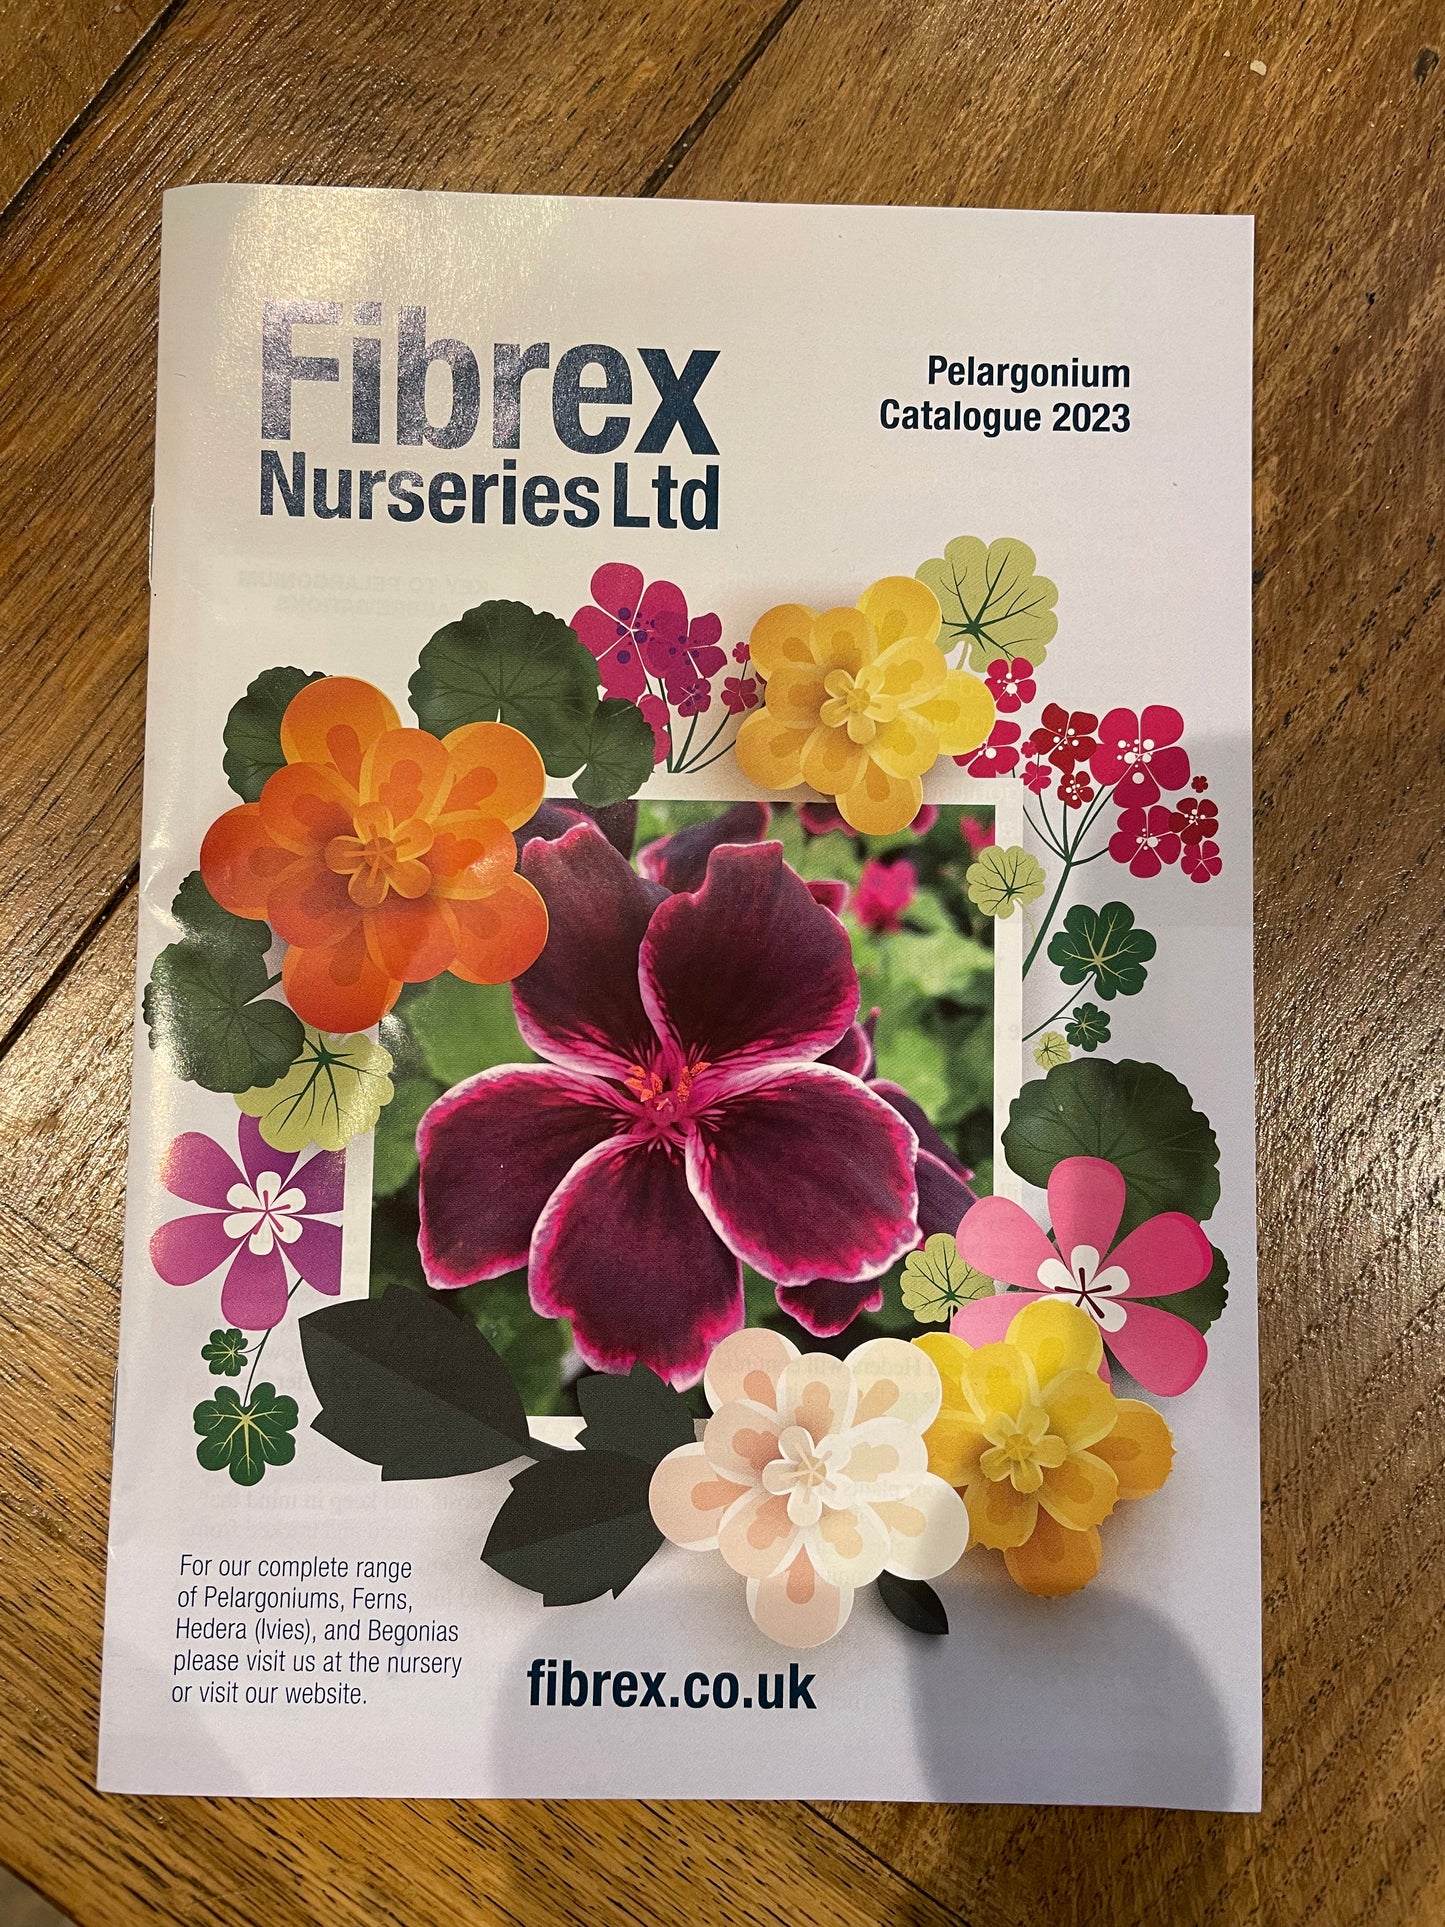 The Latest Fibrex Catalogue